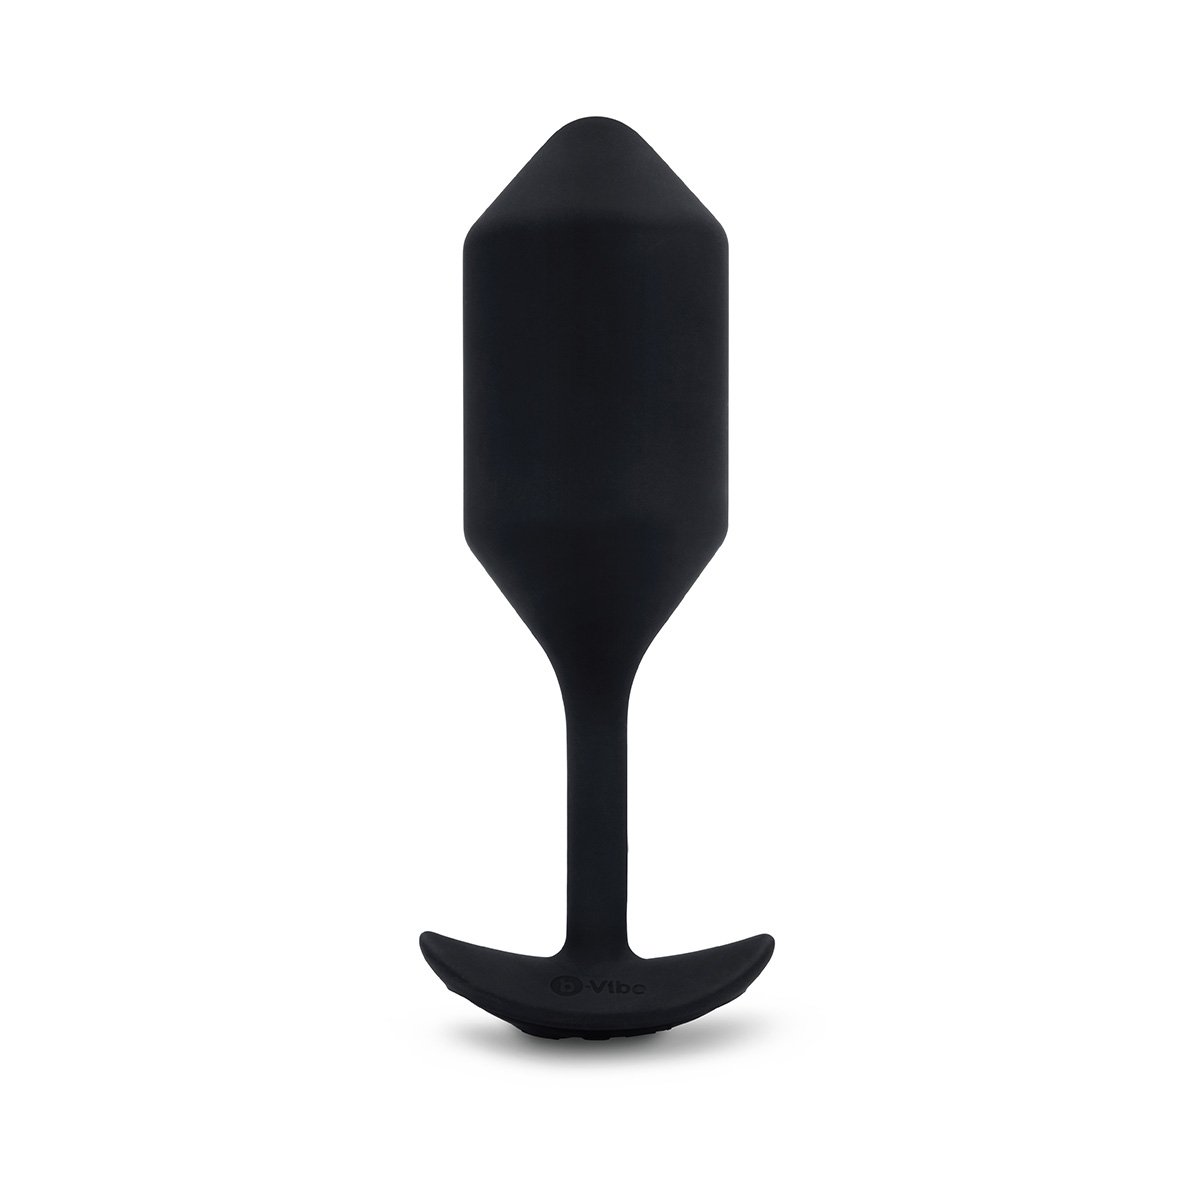 B-Vibe Snug Plug Vibrating XL - Buy At Luxury Toy X - Free 3-Day Shipping